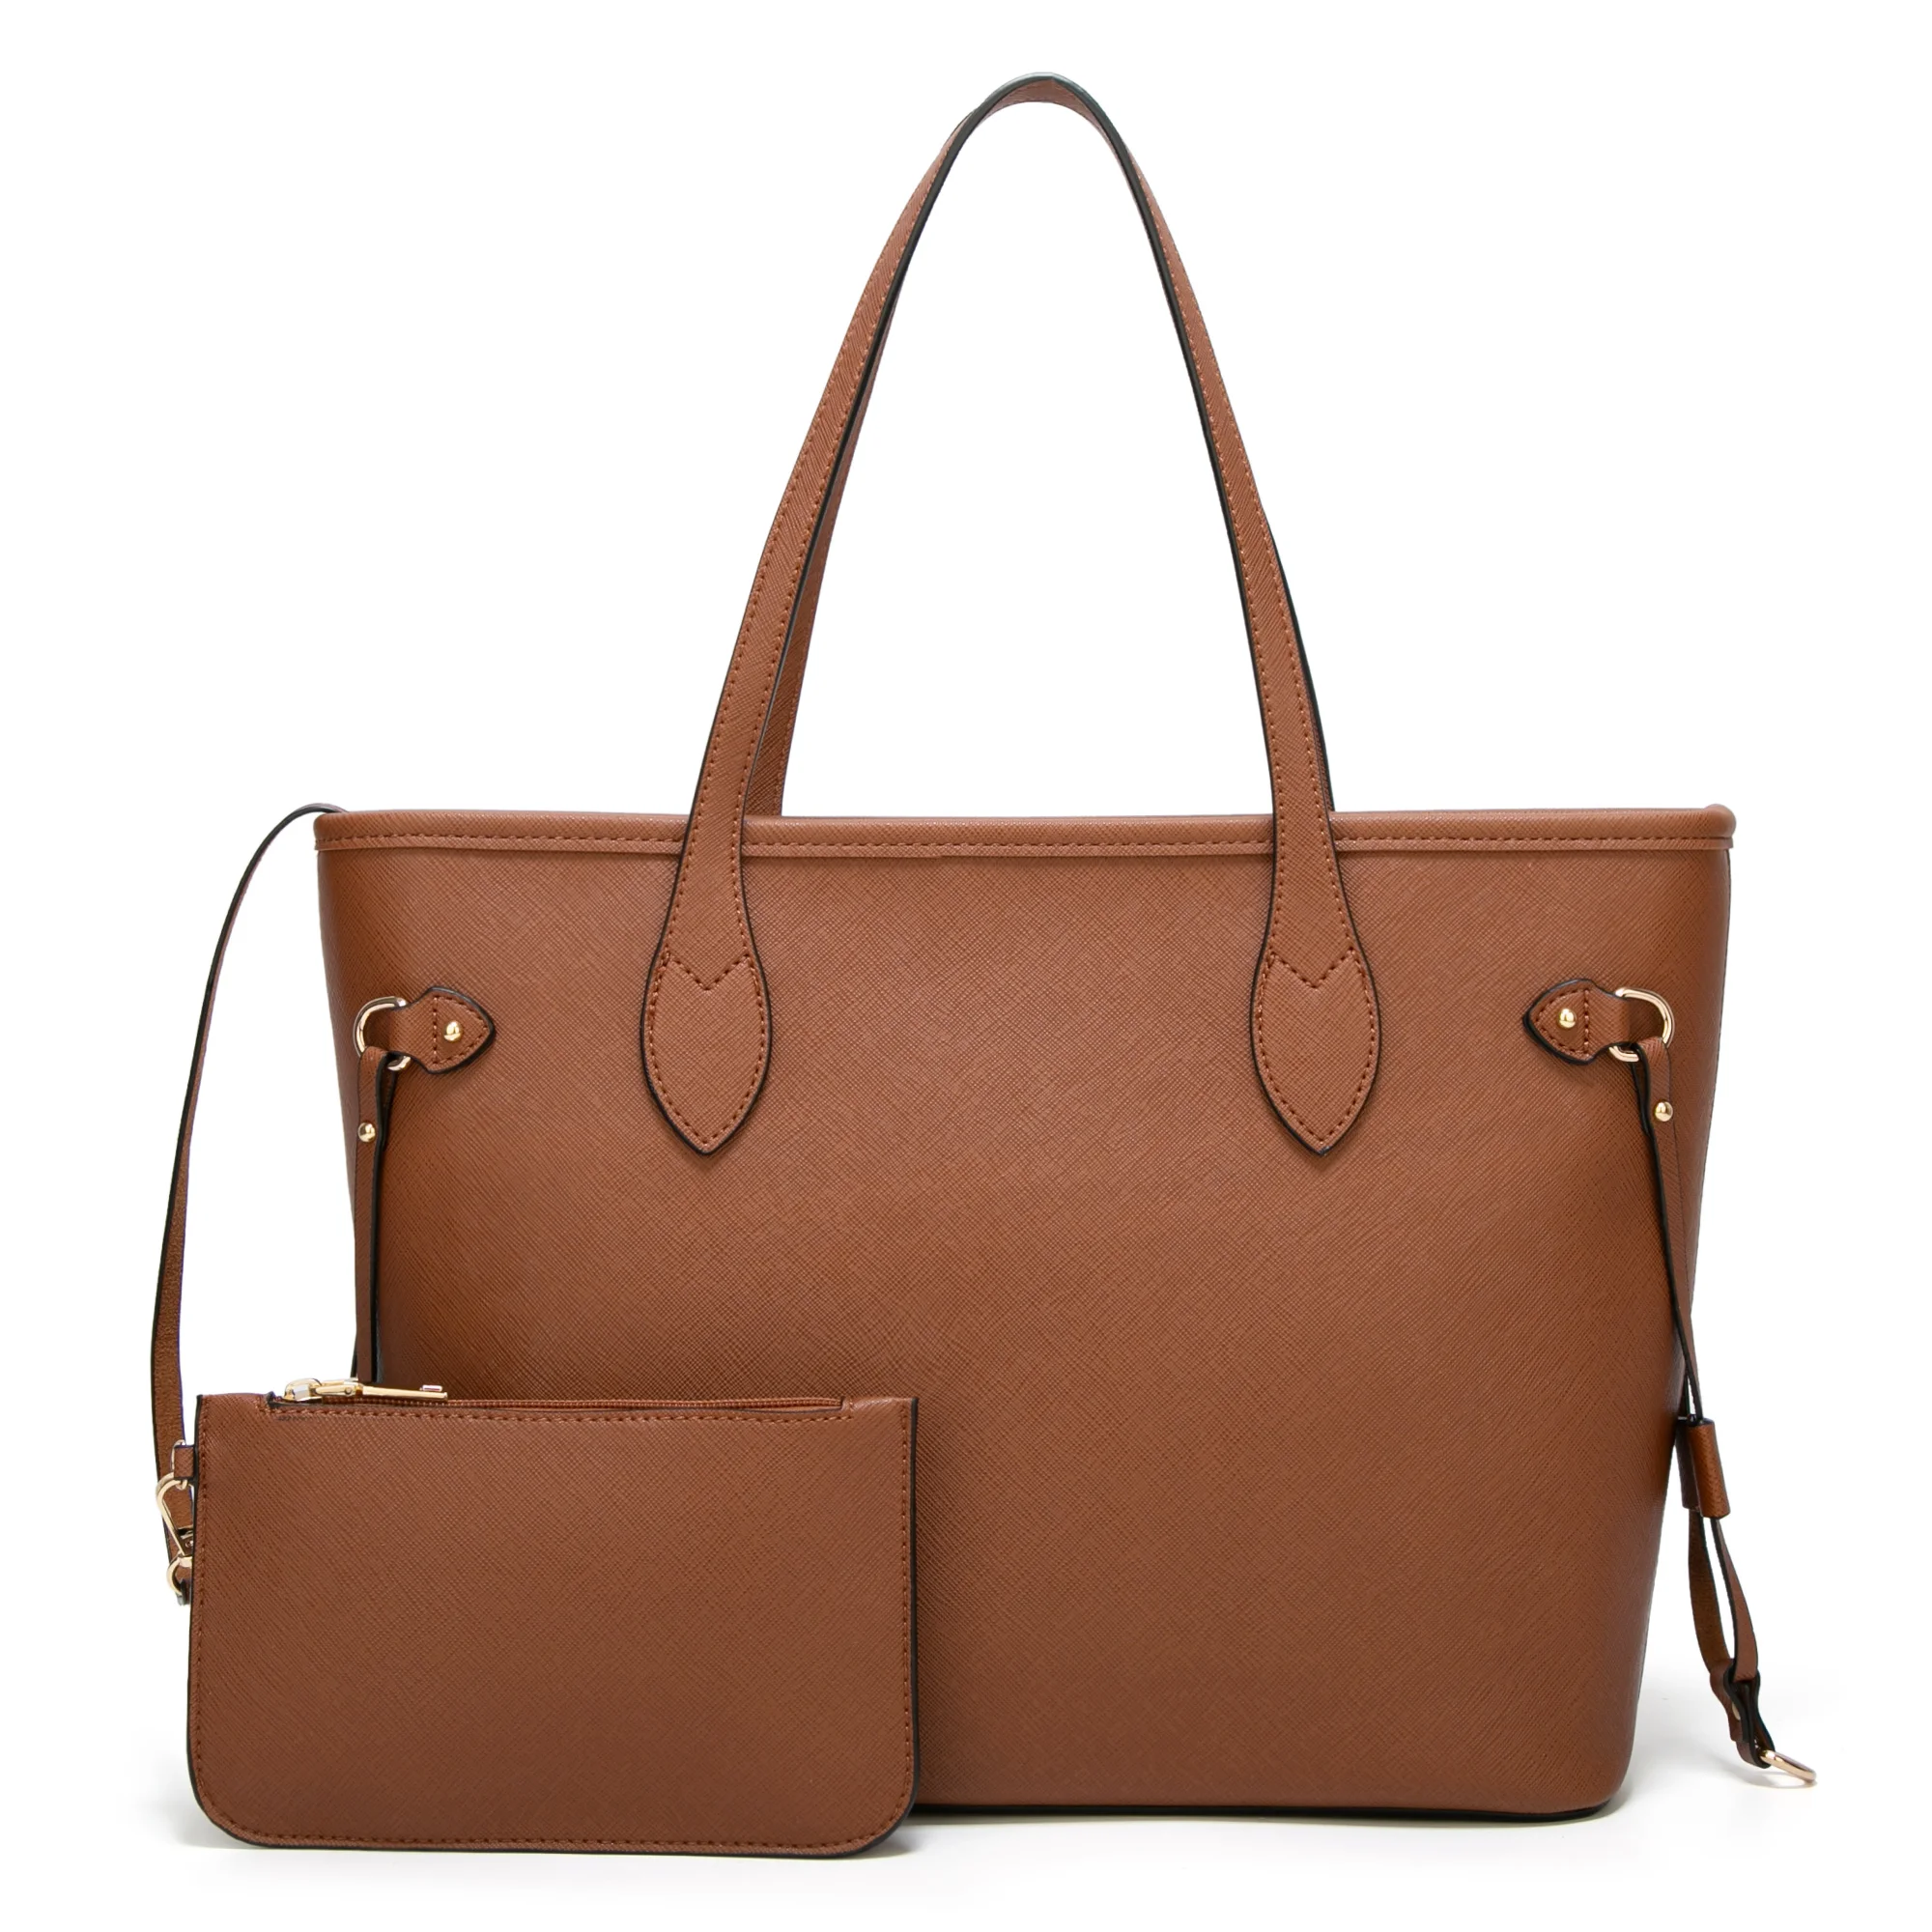 
Pink Satchel Purses and Handbags for Women Shoulder Tote Bags Wallets Top Handle Messenger Hobo 2pcs Set 